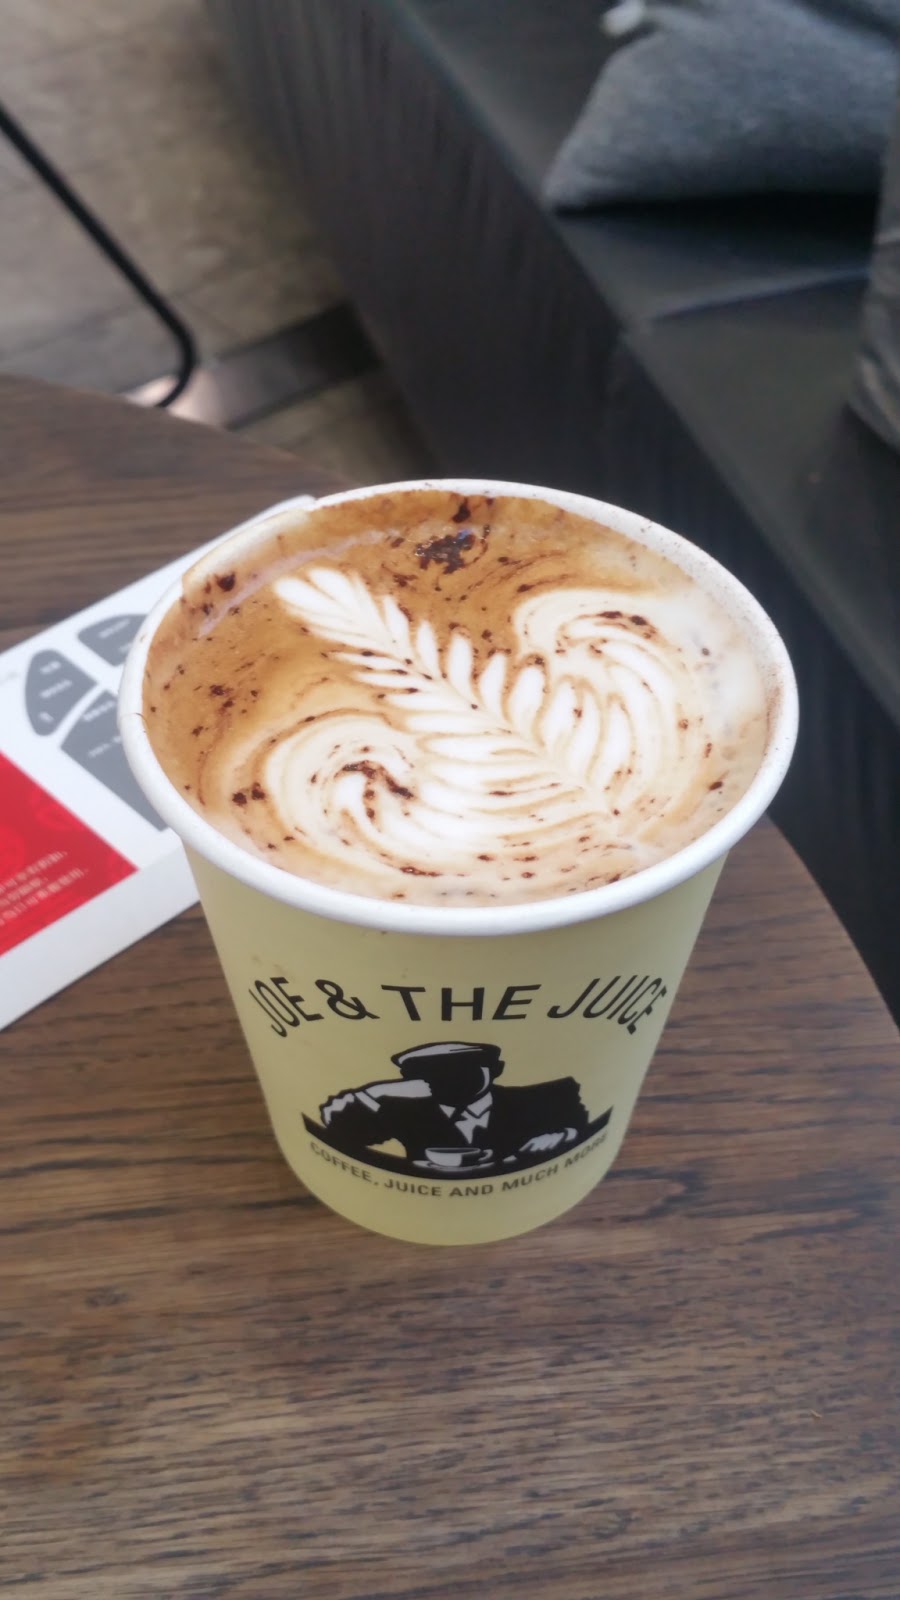 JOE & THE JUICE | cafe | International Terminal 1, Mascot NSW 2020, Australia